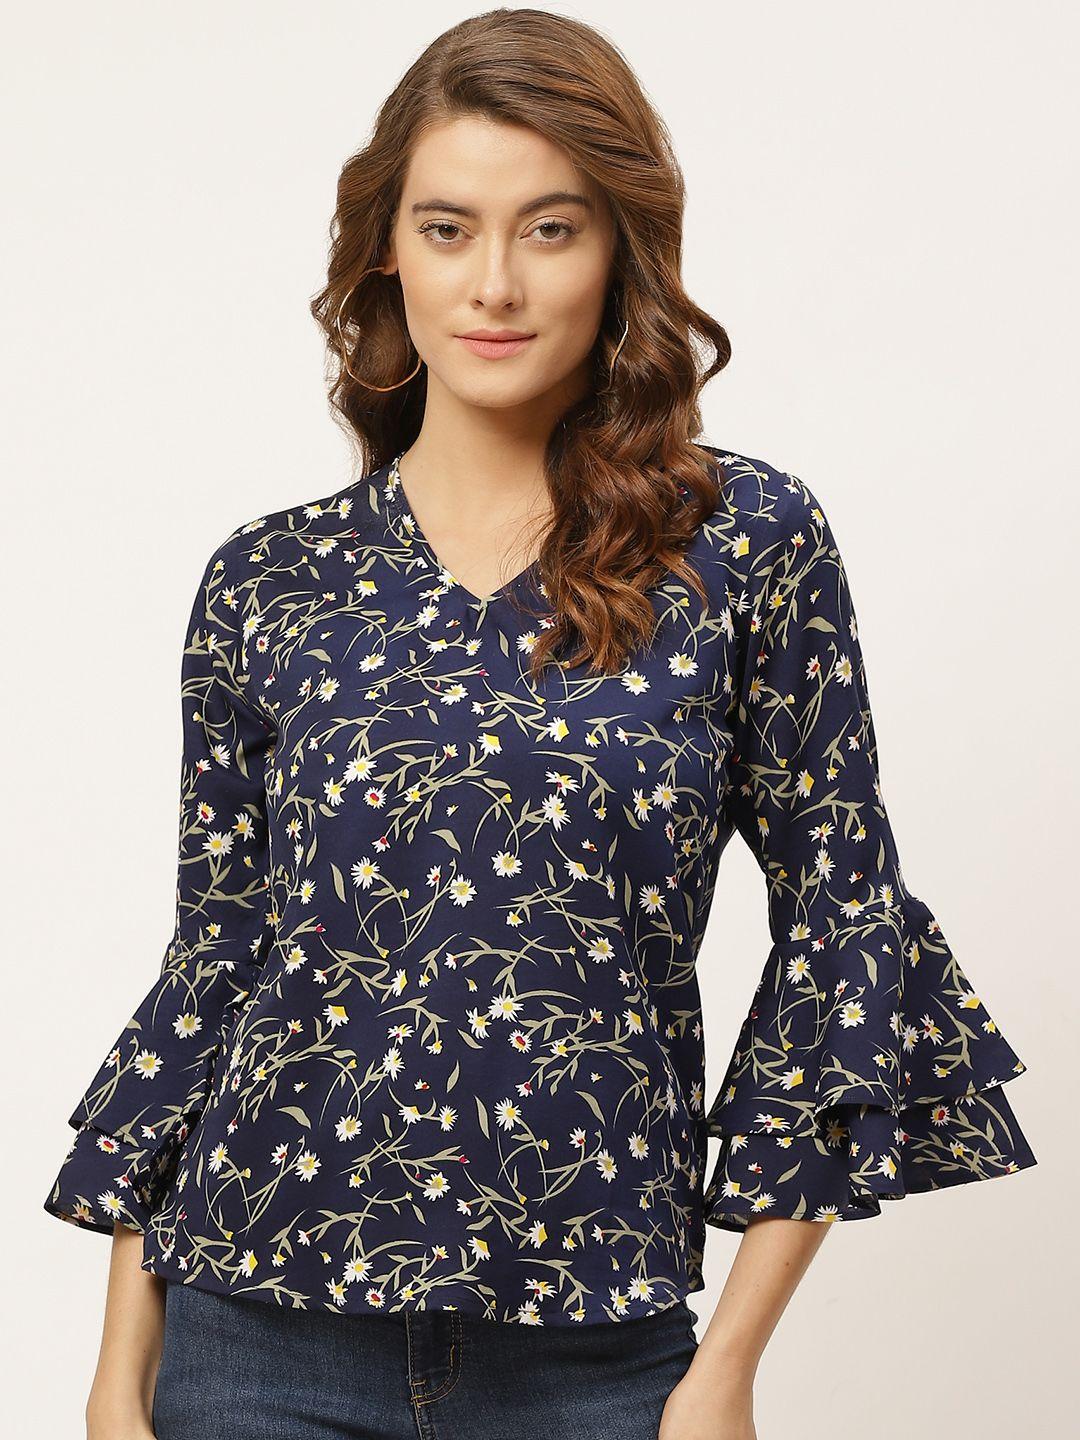 one-femme-navy-blue-&-white-floral-printed-bell-sleeves-regular-top